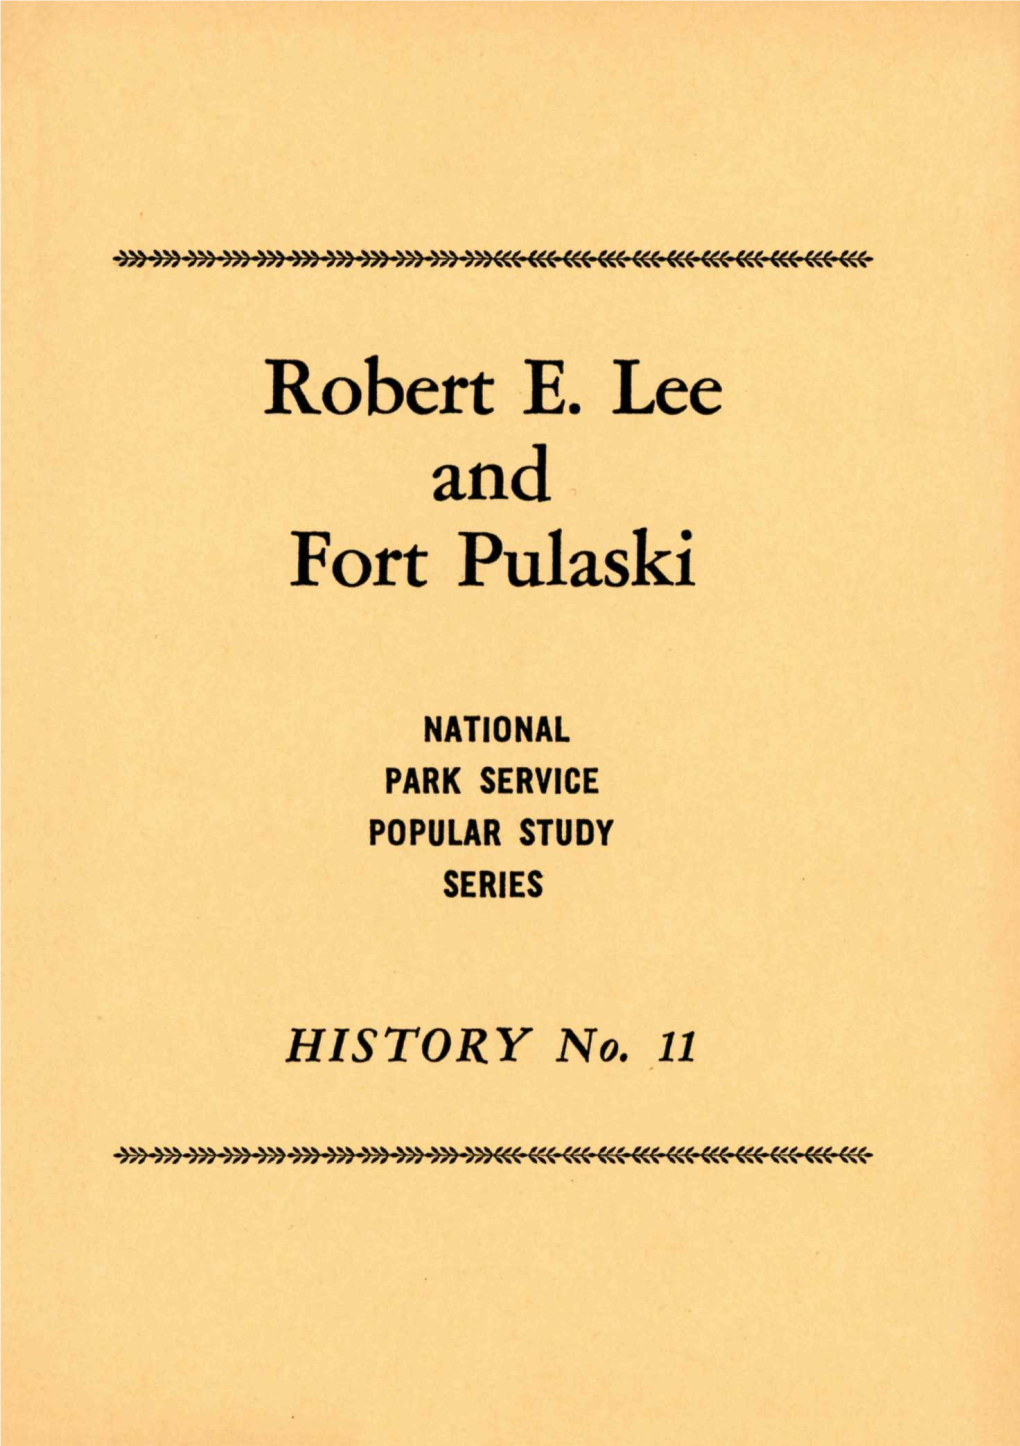 Robert E. Lee and Fort Pulaski